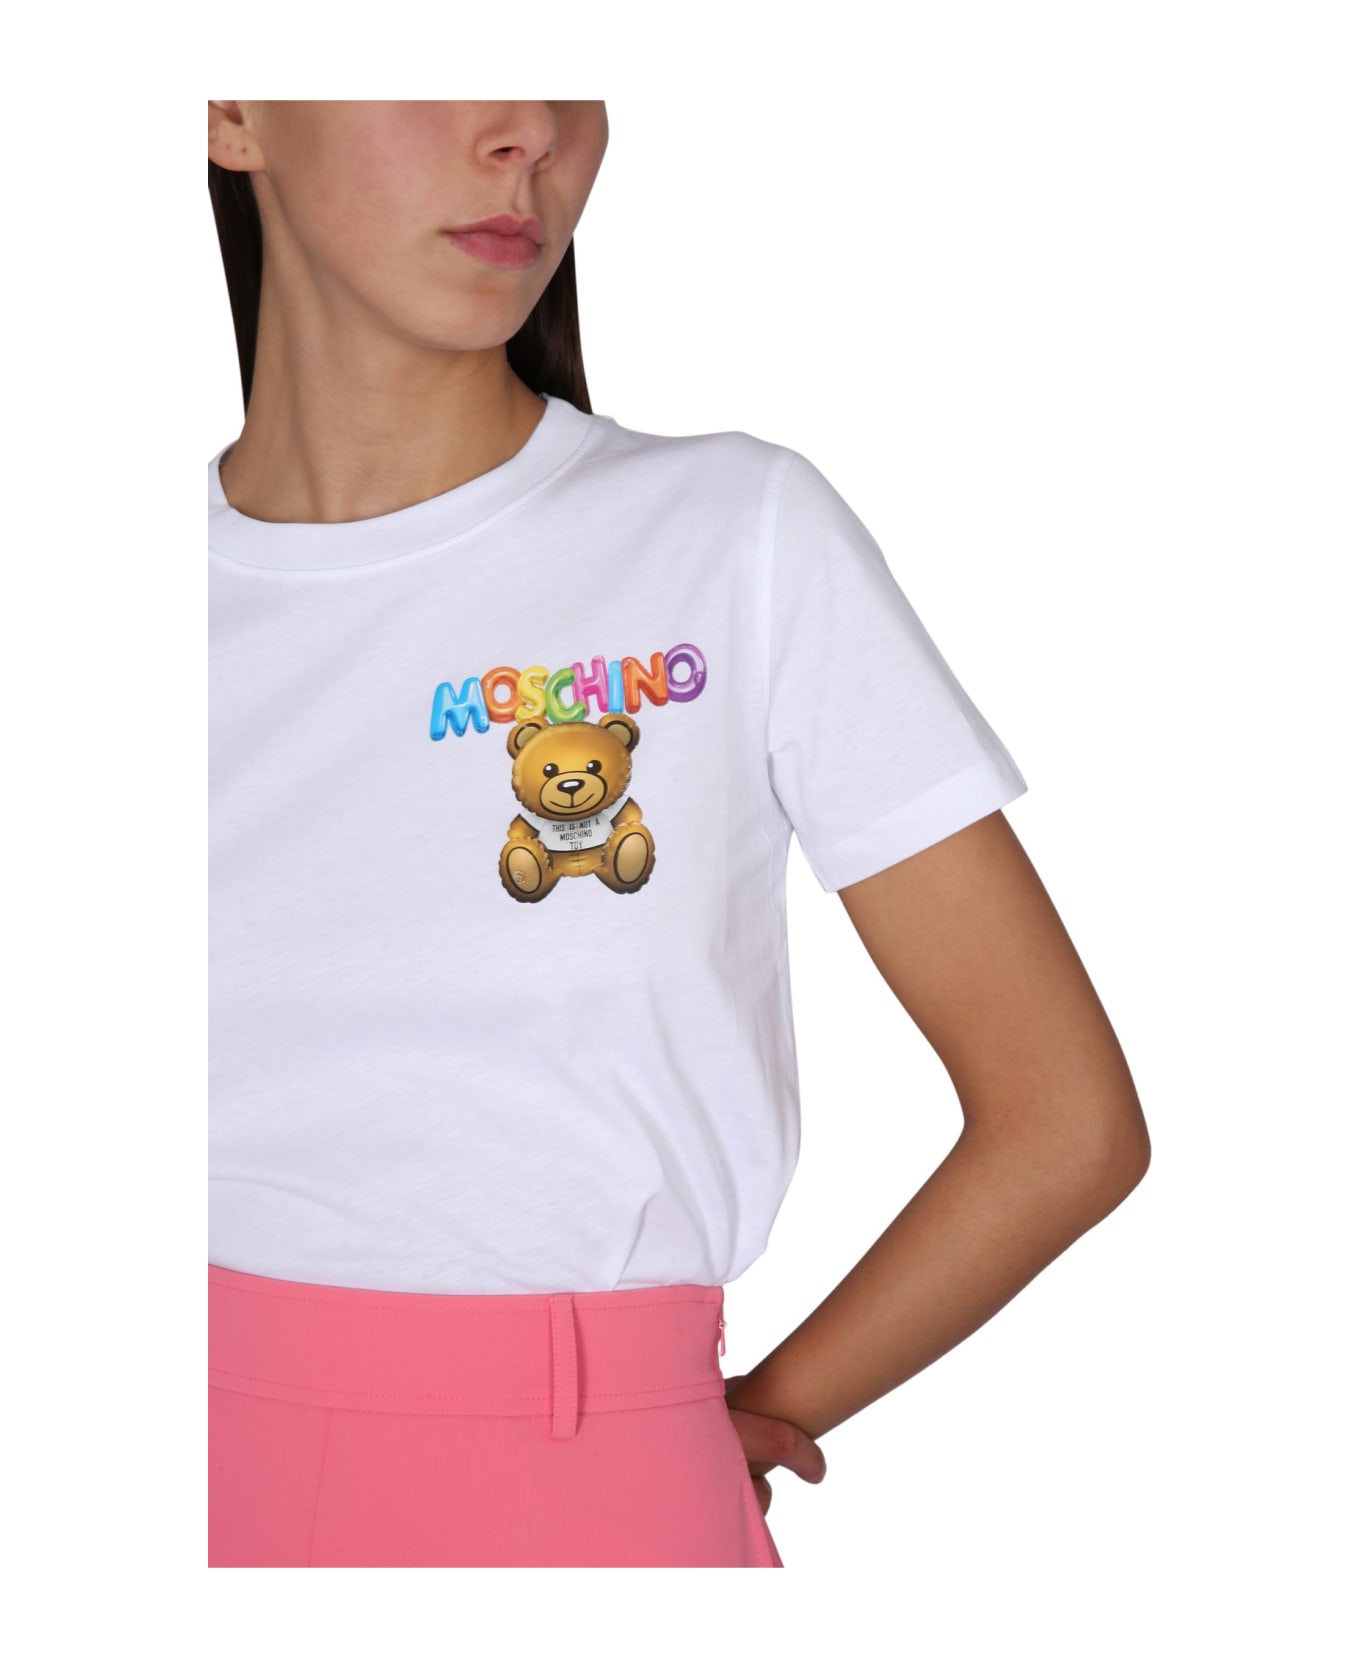 Moschino Teddy Bear T-shirt - White